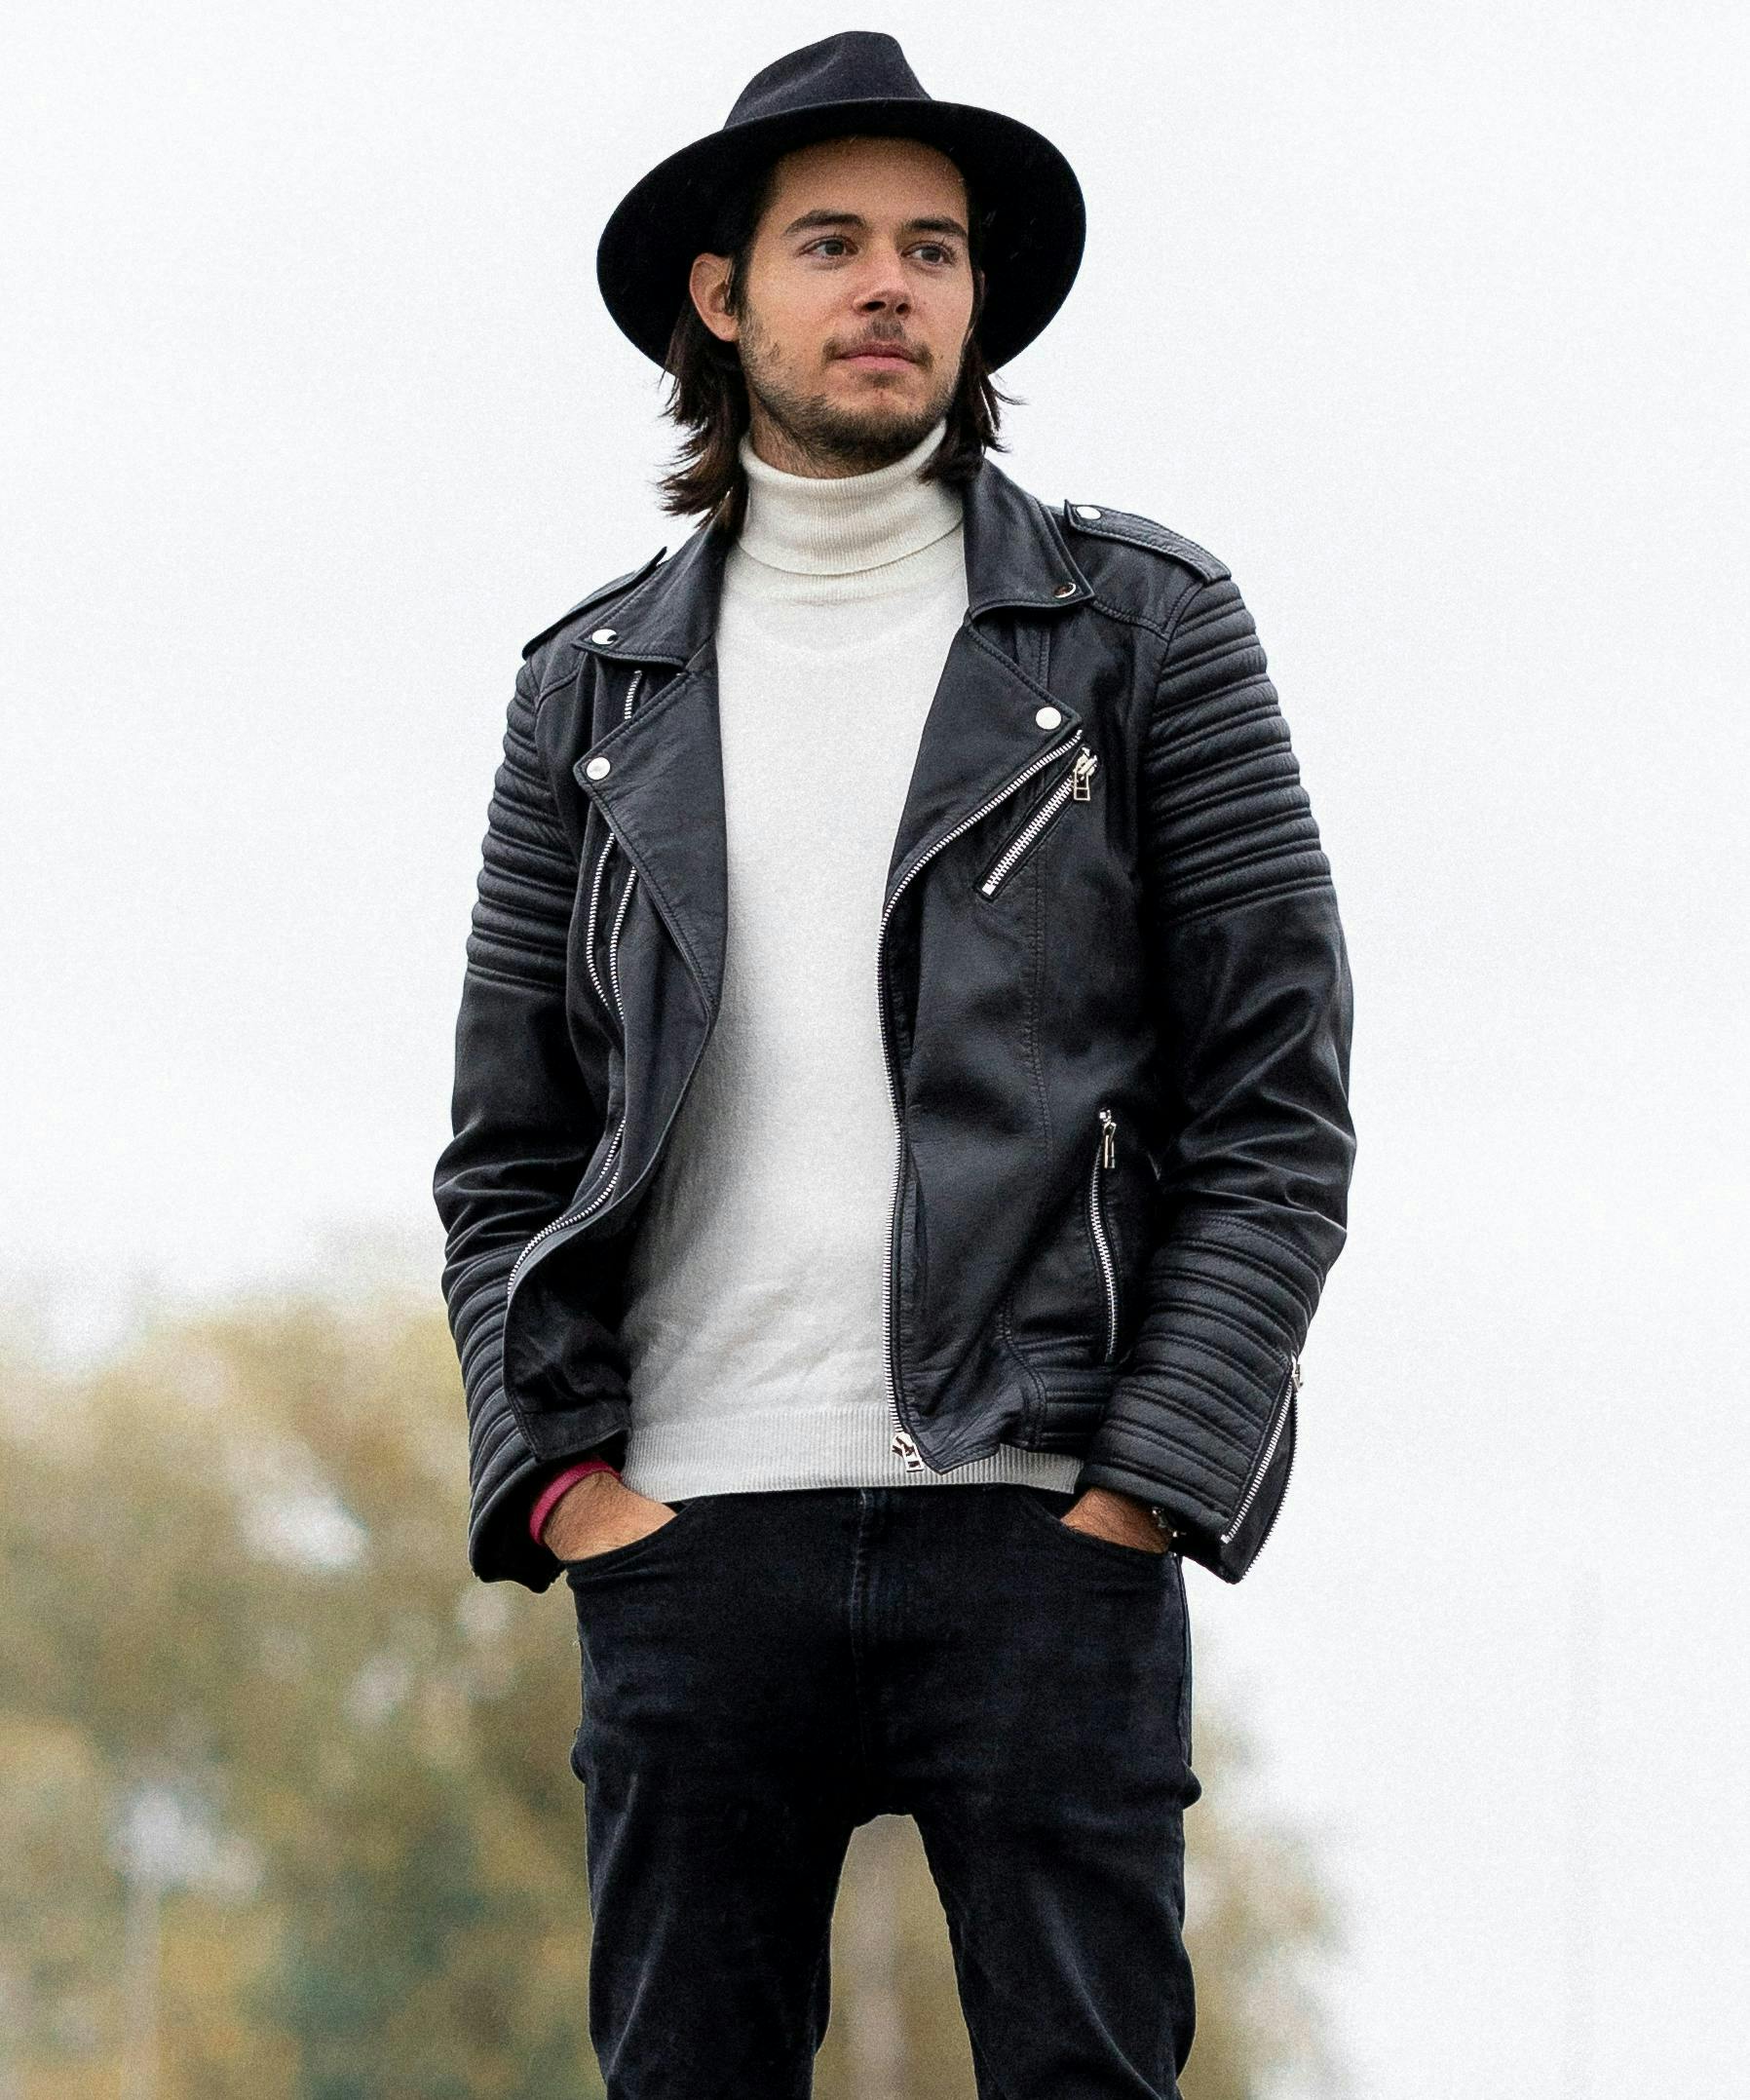 clothing apparel jacket coat sleeve person human long sleeve hat